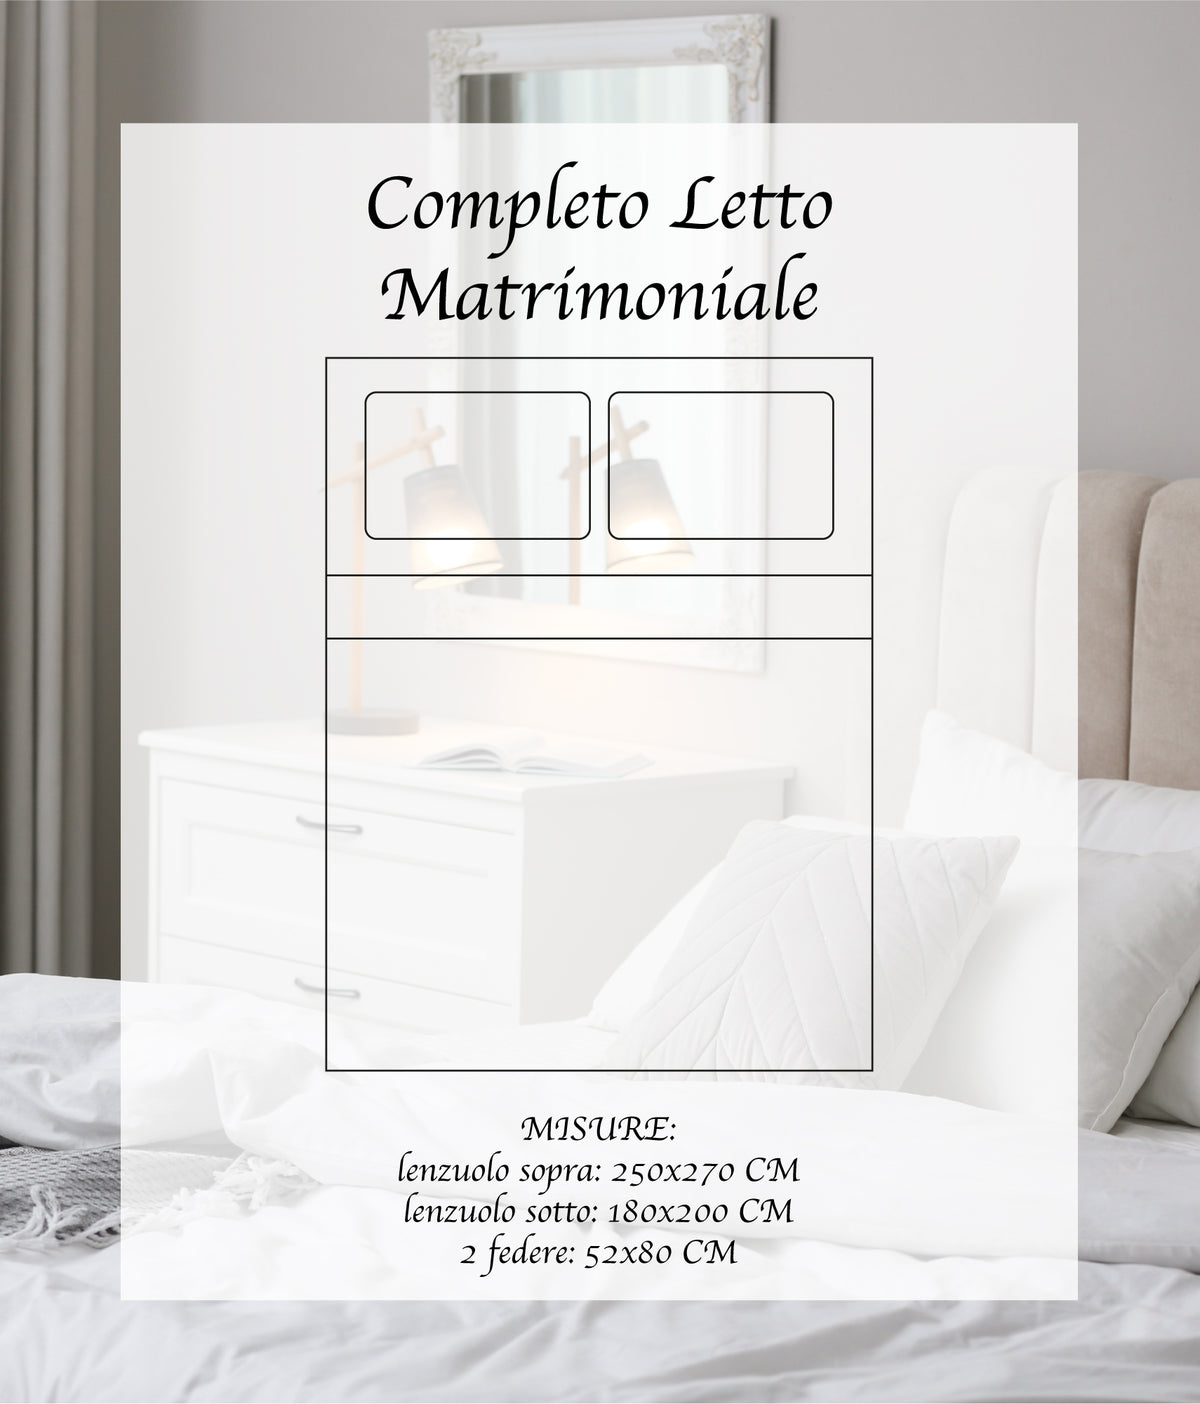 Completo Letto Lenzuola In Cotone Percalle Matrimoniale Federe Con Balza A Contrasto Tinta Unita Elegante Misure Maxi